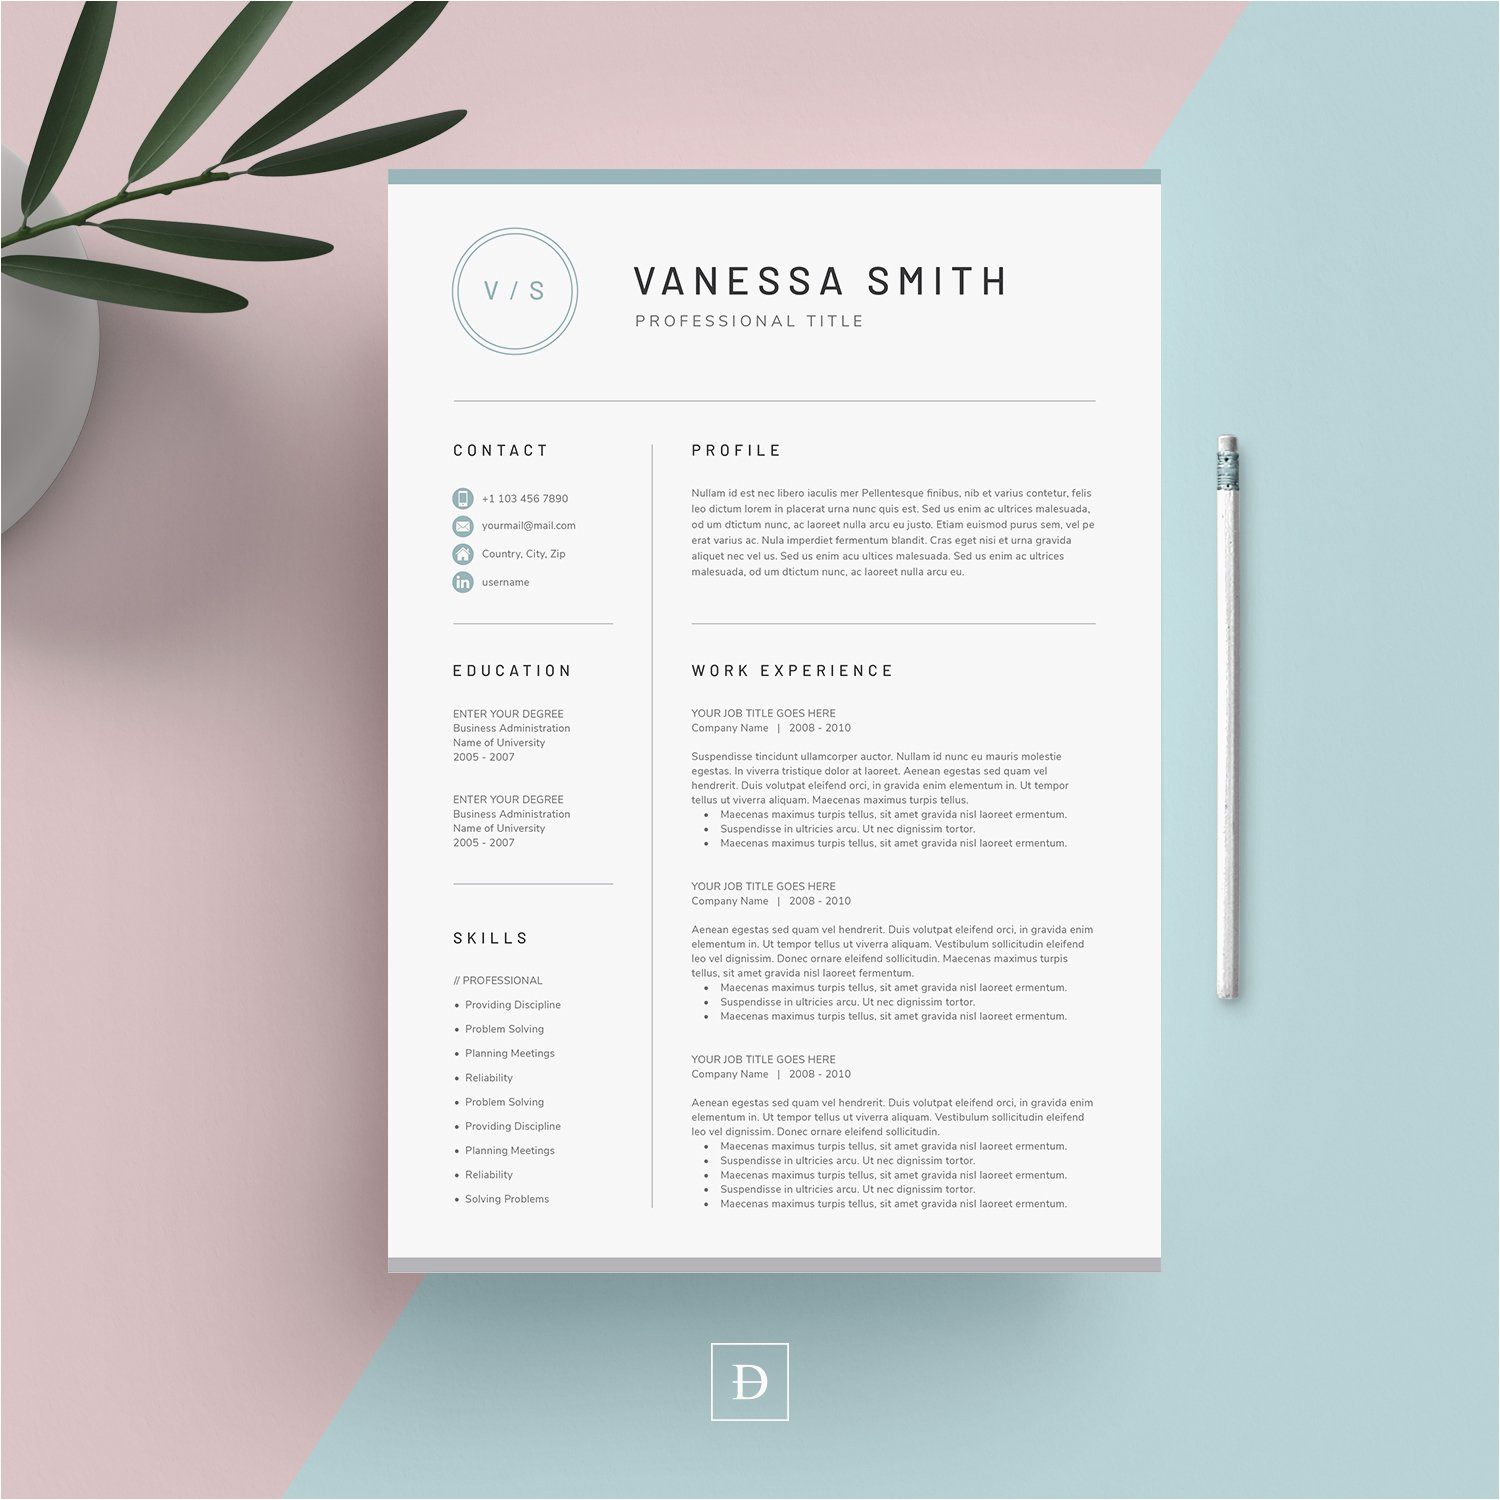 Word Resume Cover Letter